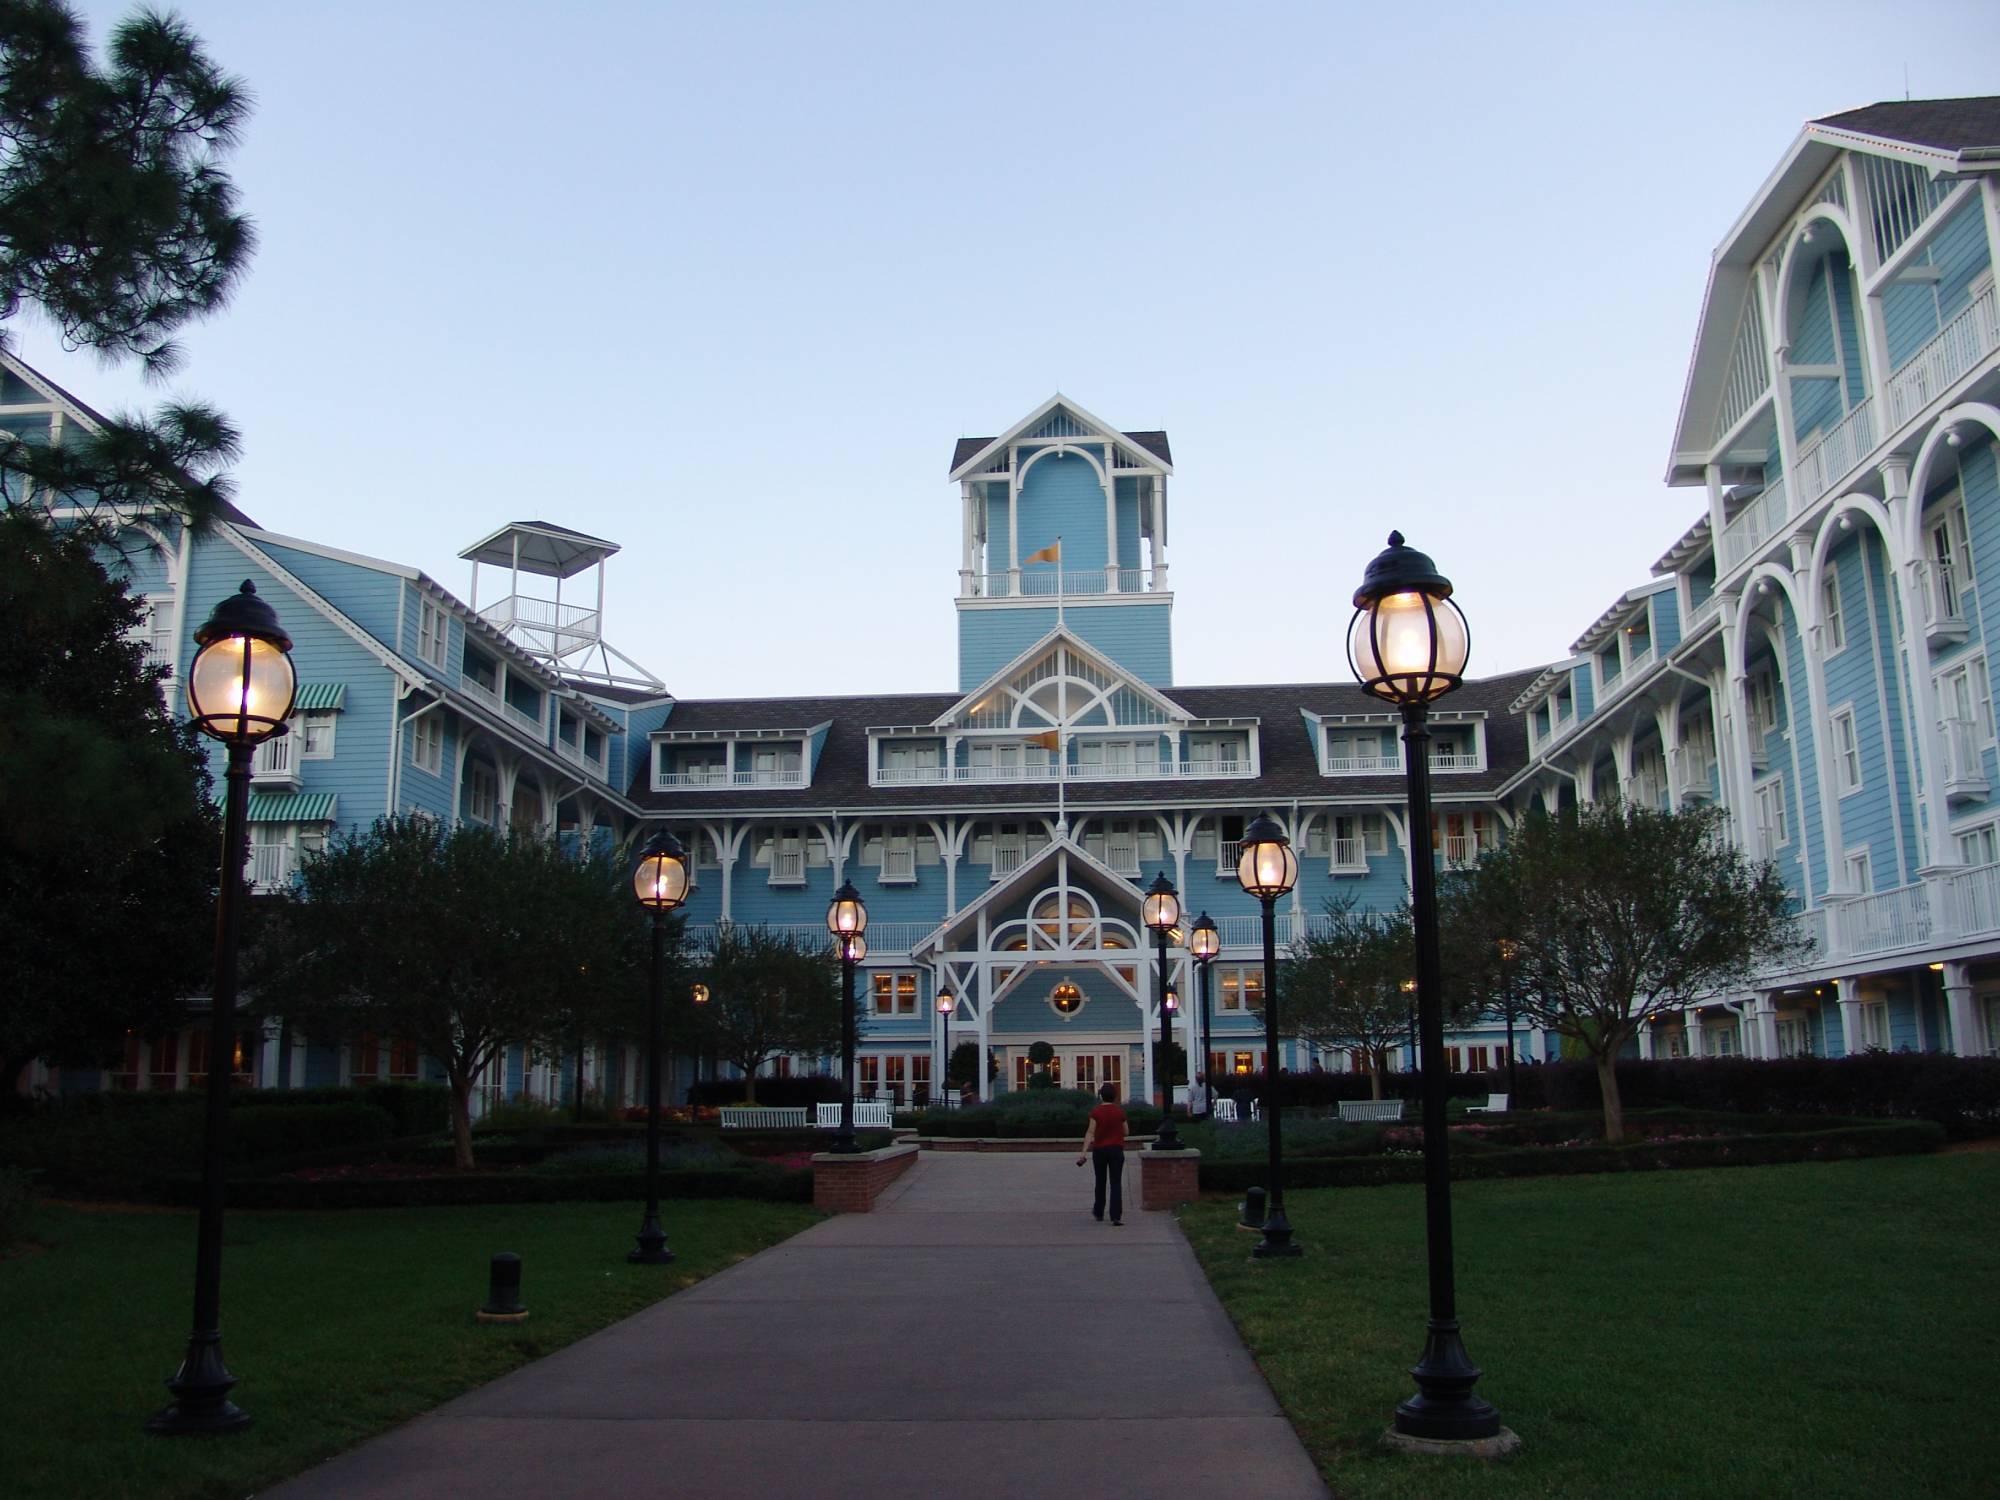 Explore the Shades of Green Resort at Walt Disney World with tips |PassPorter.com